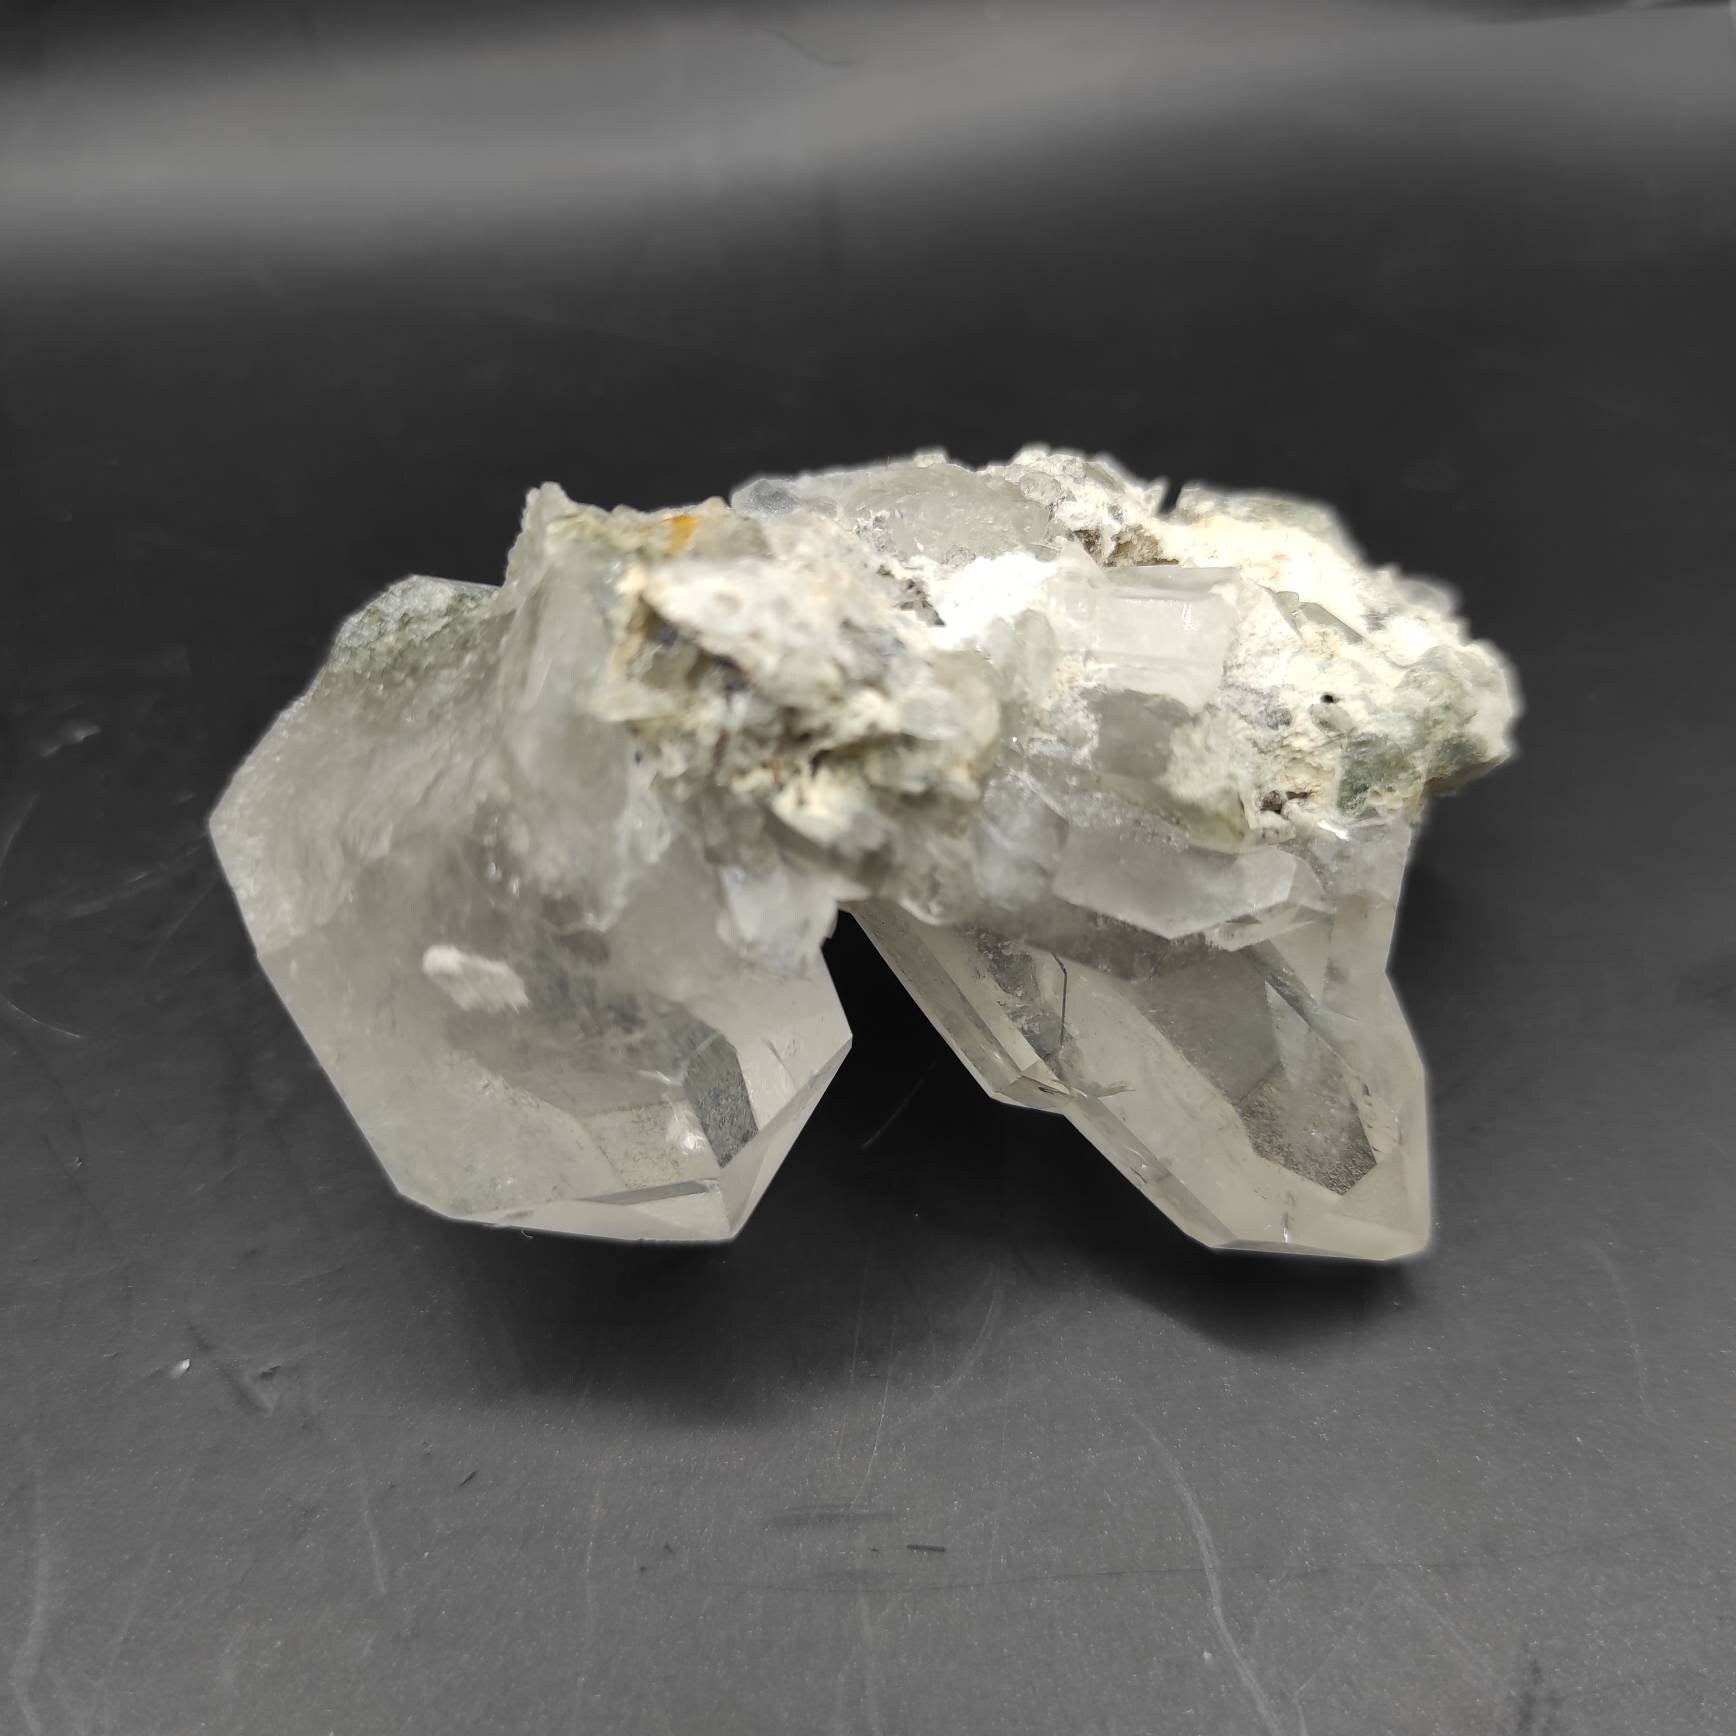 63g Clear & Chlorite Quartz - White Quartz Mineral with Green Chlorite Quartz - Natural Crystal Specimen - Pakistan Rough Quartz Mineral